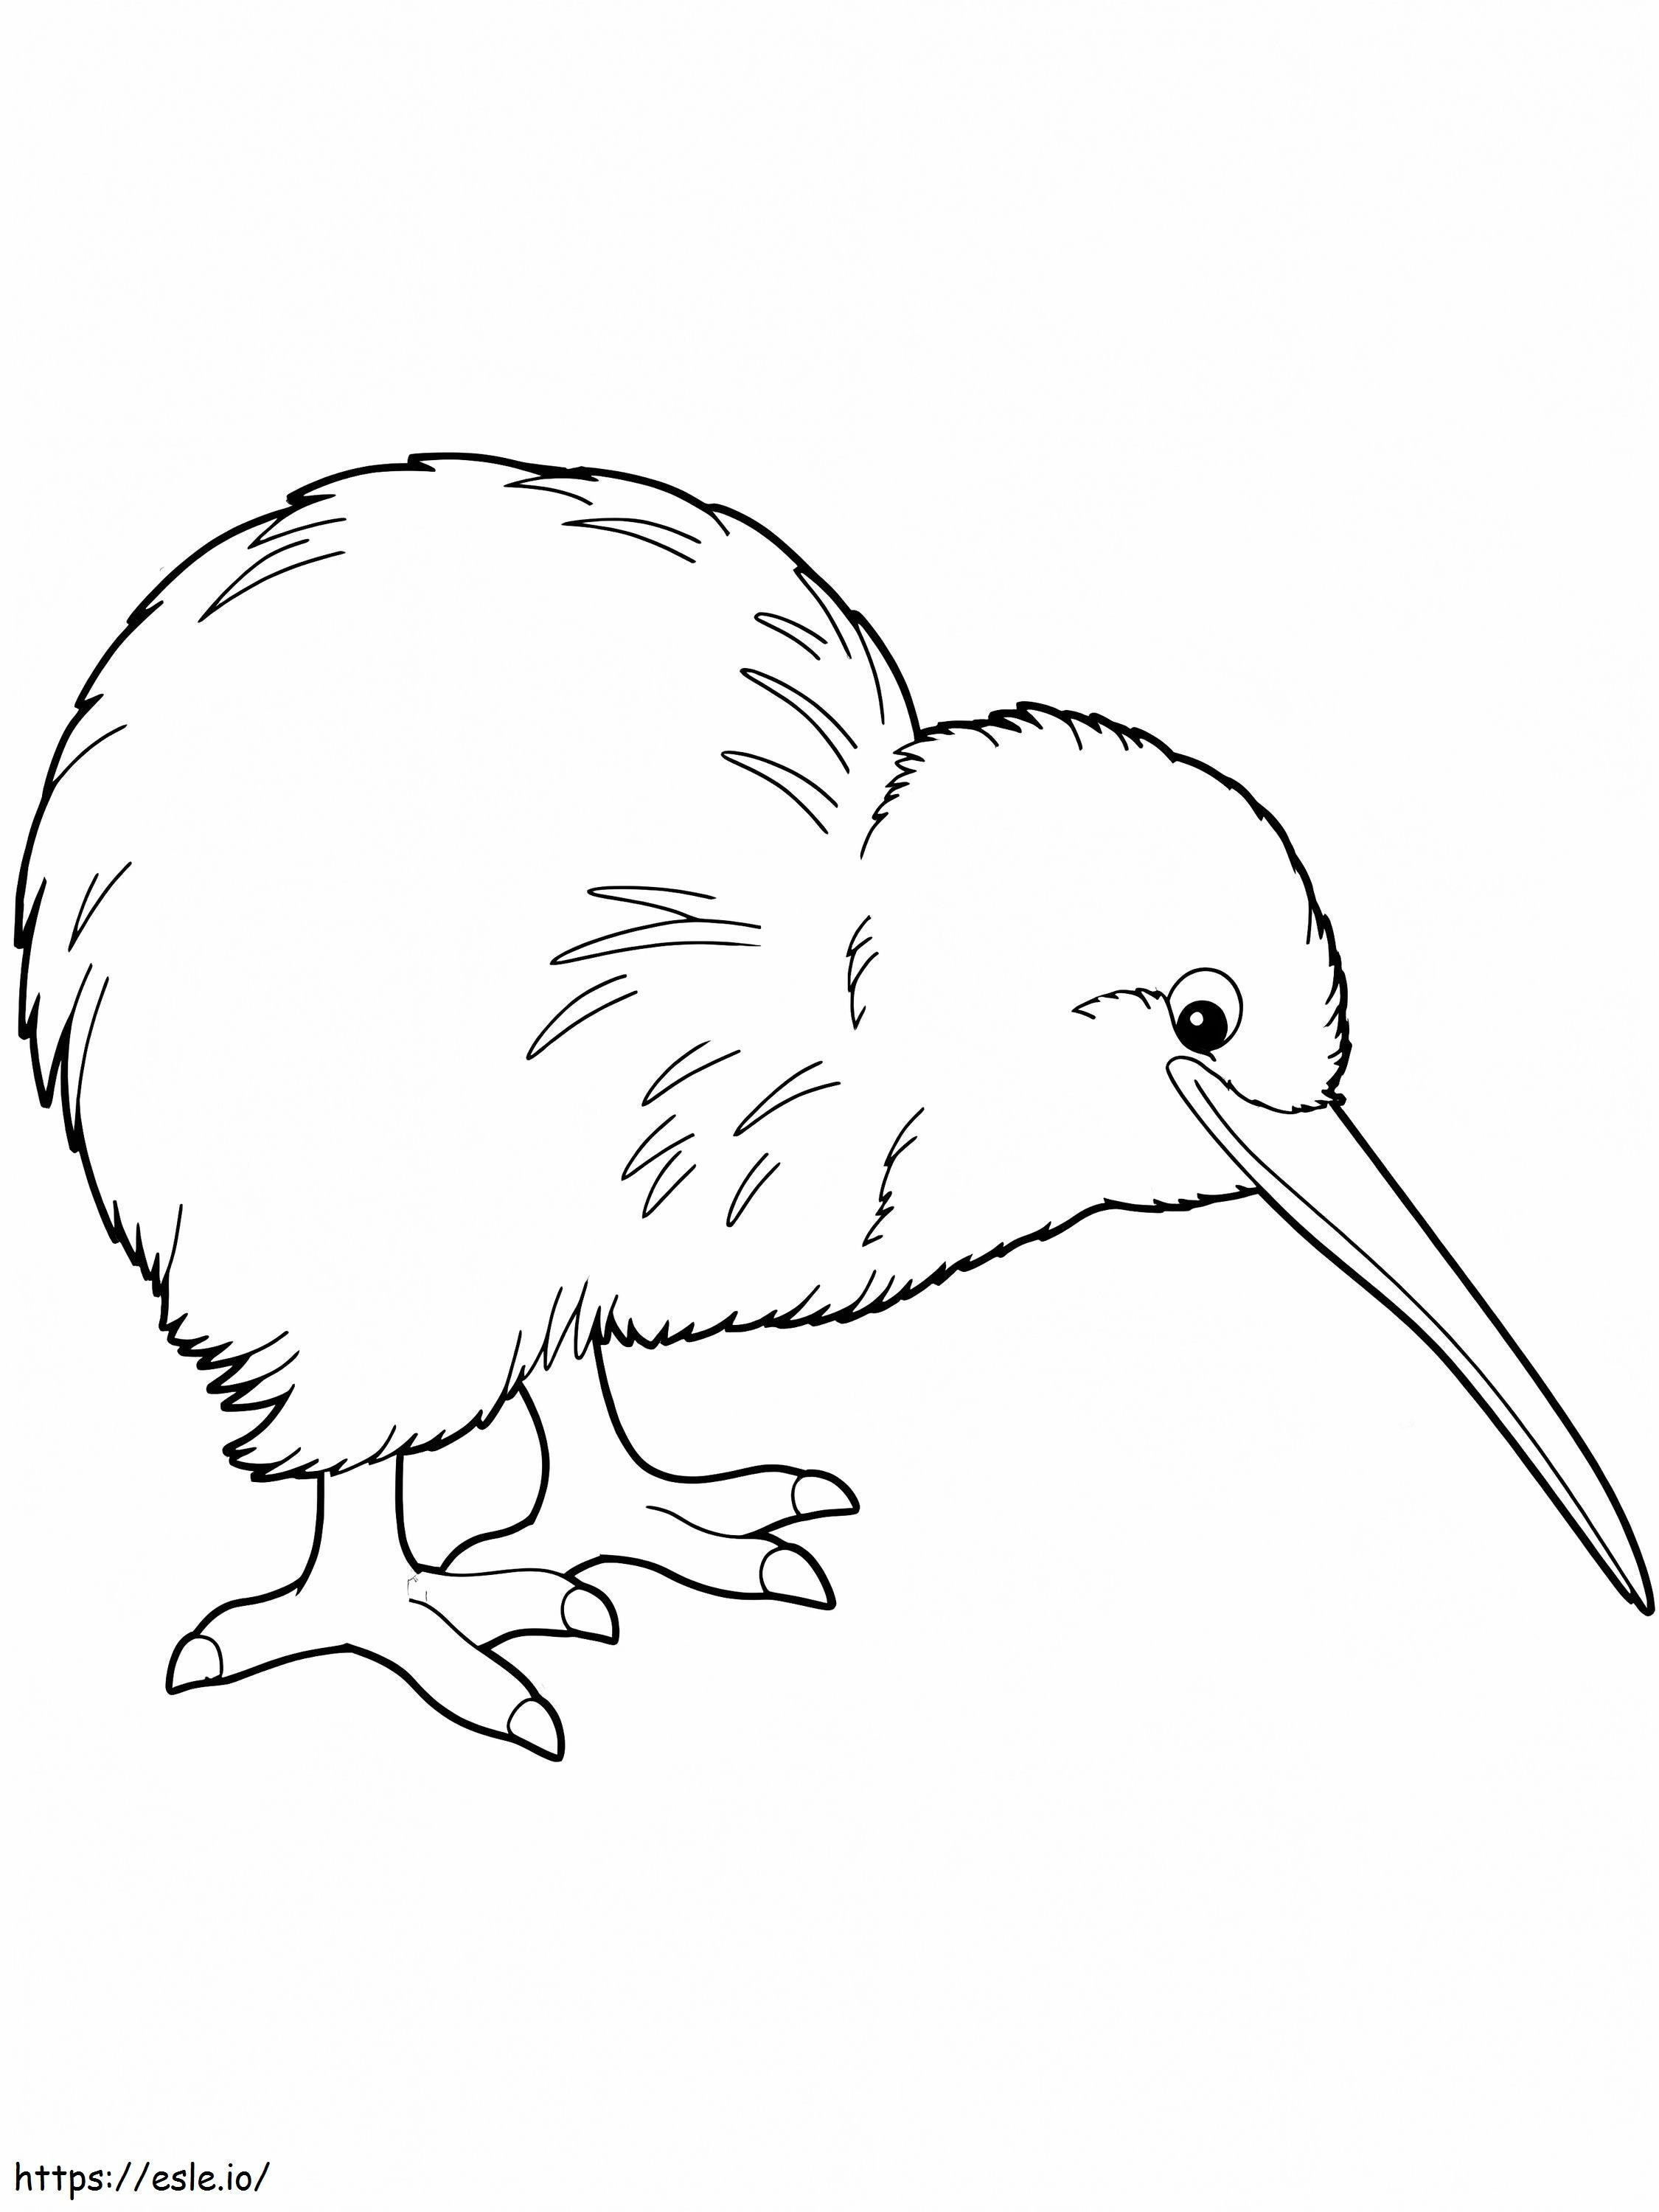 Coloriage Oiseau kiwi simple à imprimer dessin